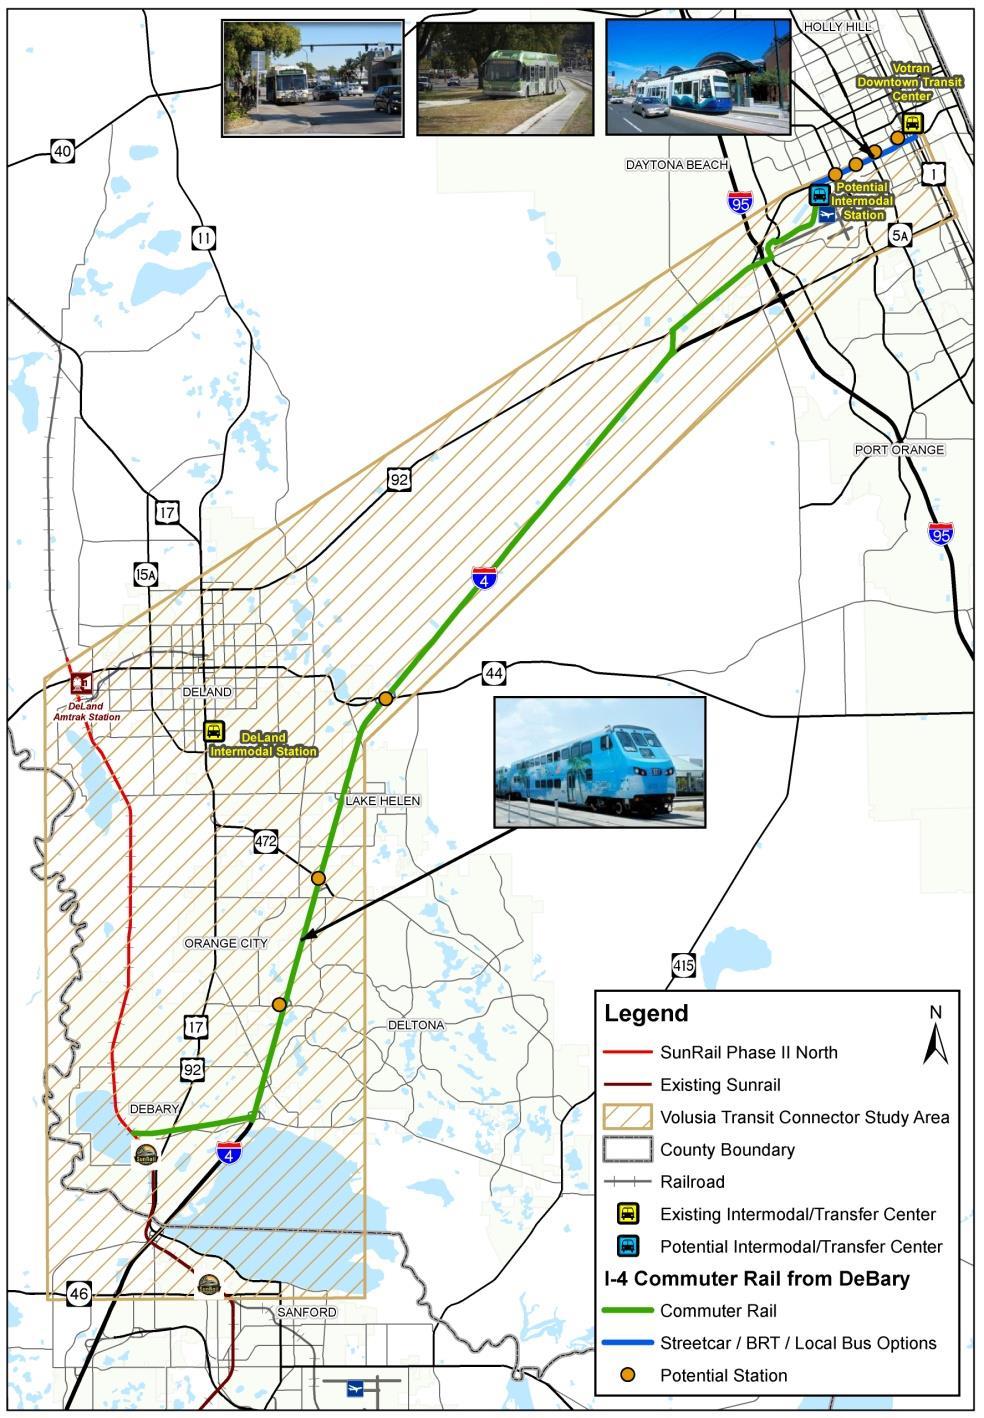 Alternative 2 I-4 Commuter Rail from DeBary Extension of commuter rail to Daytona Beach via utility corridor and